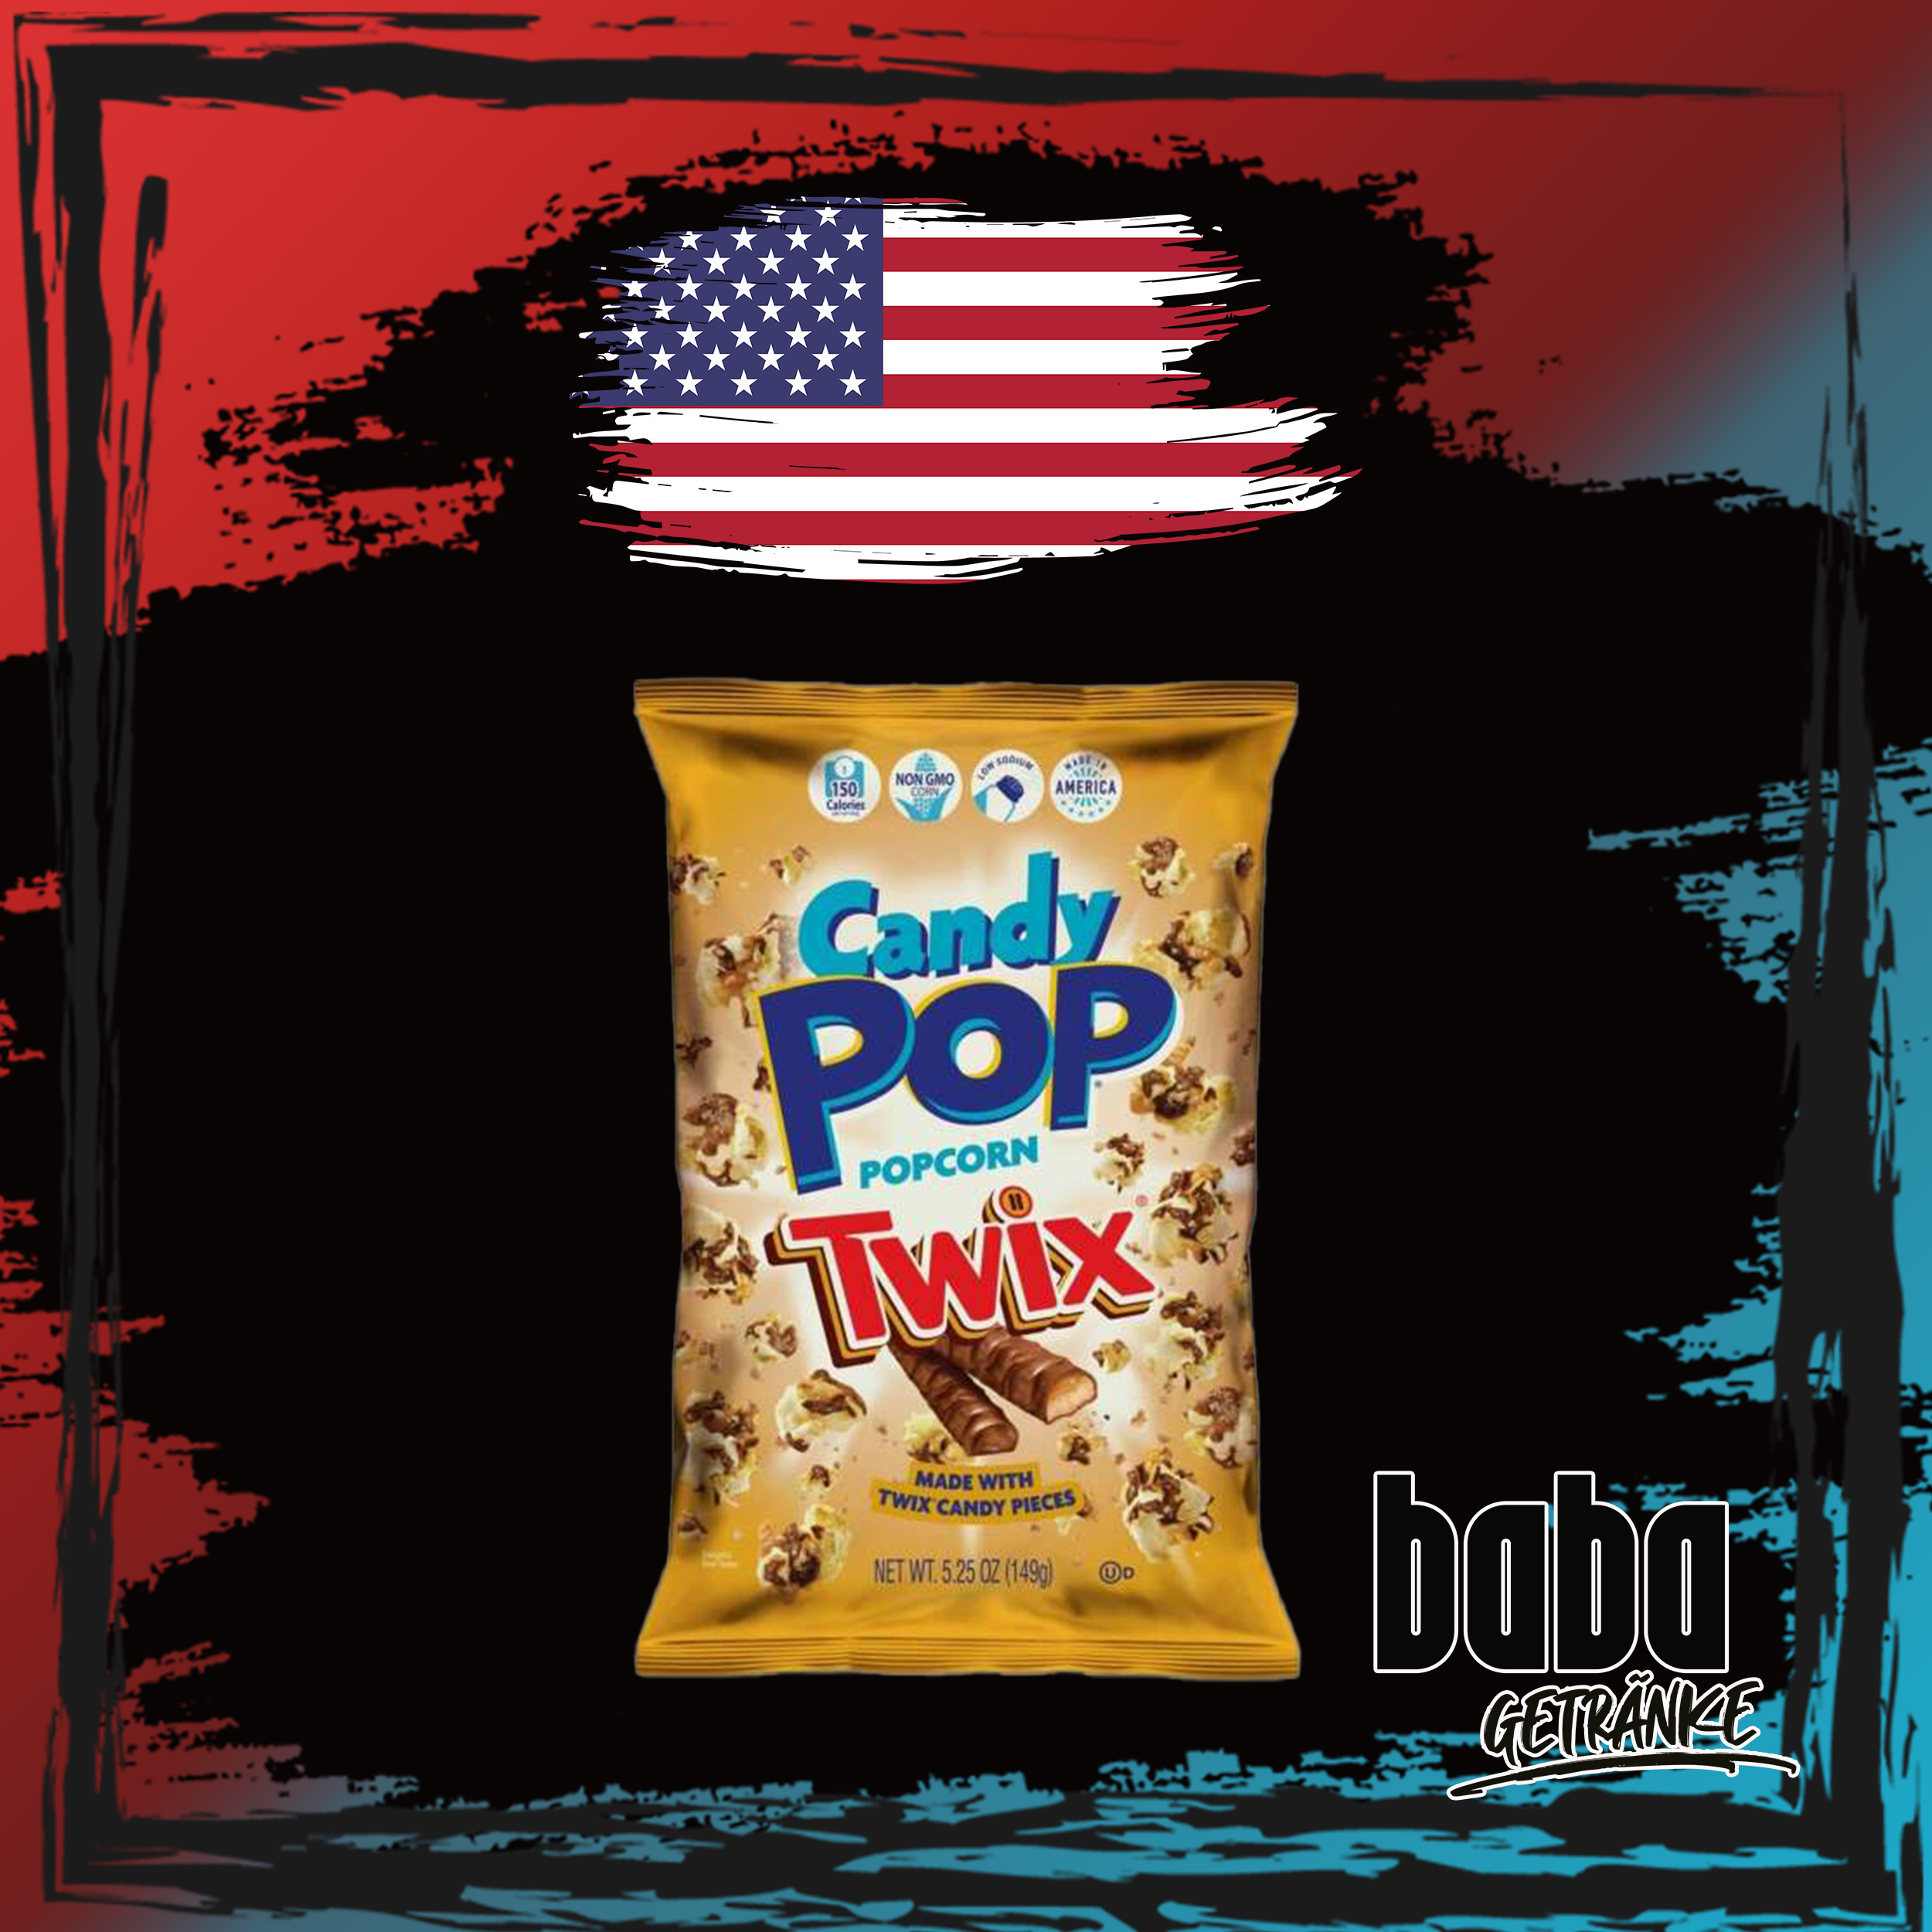 USA-Candi-Pop-Popcorn-Twix-149g